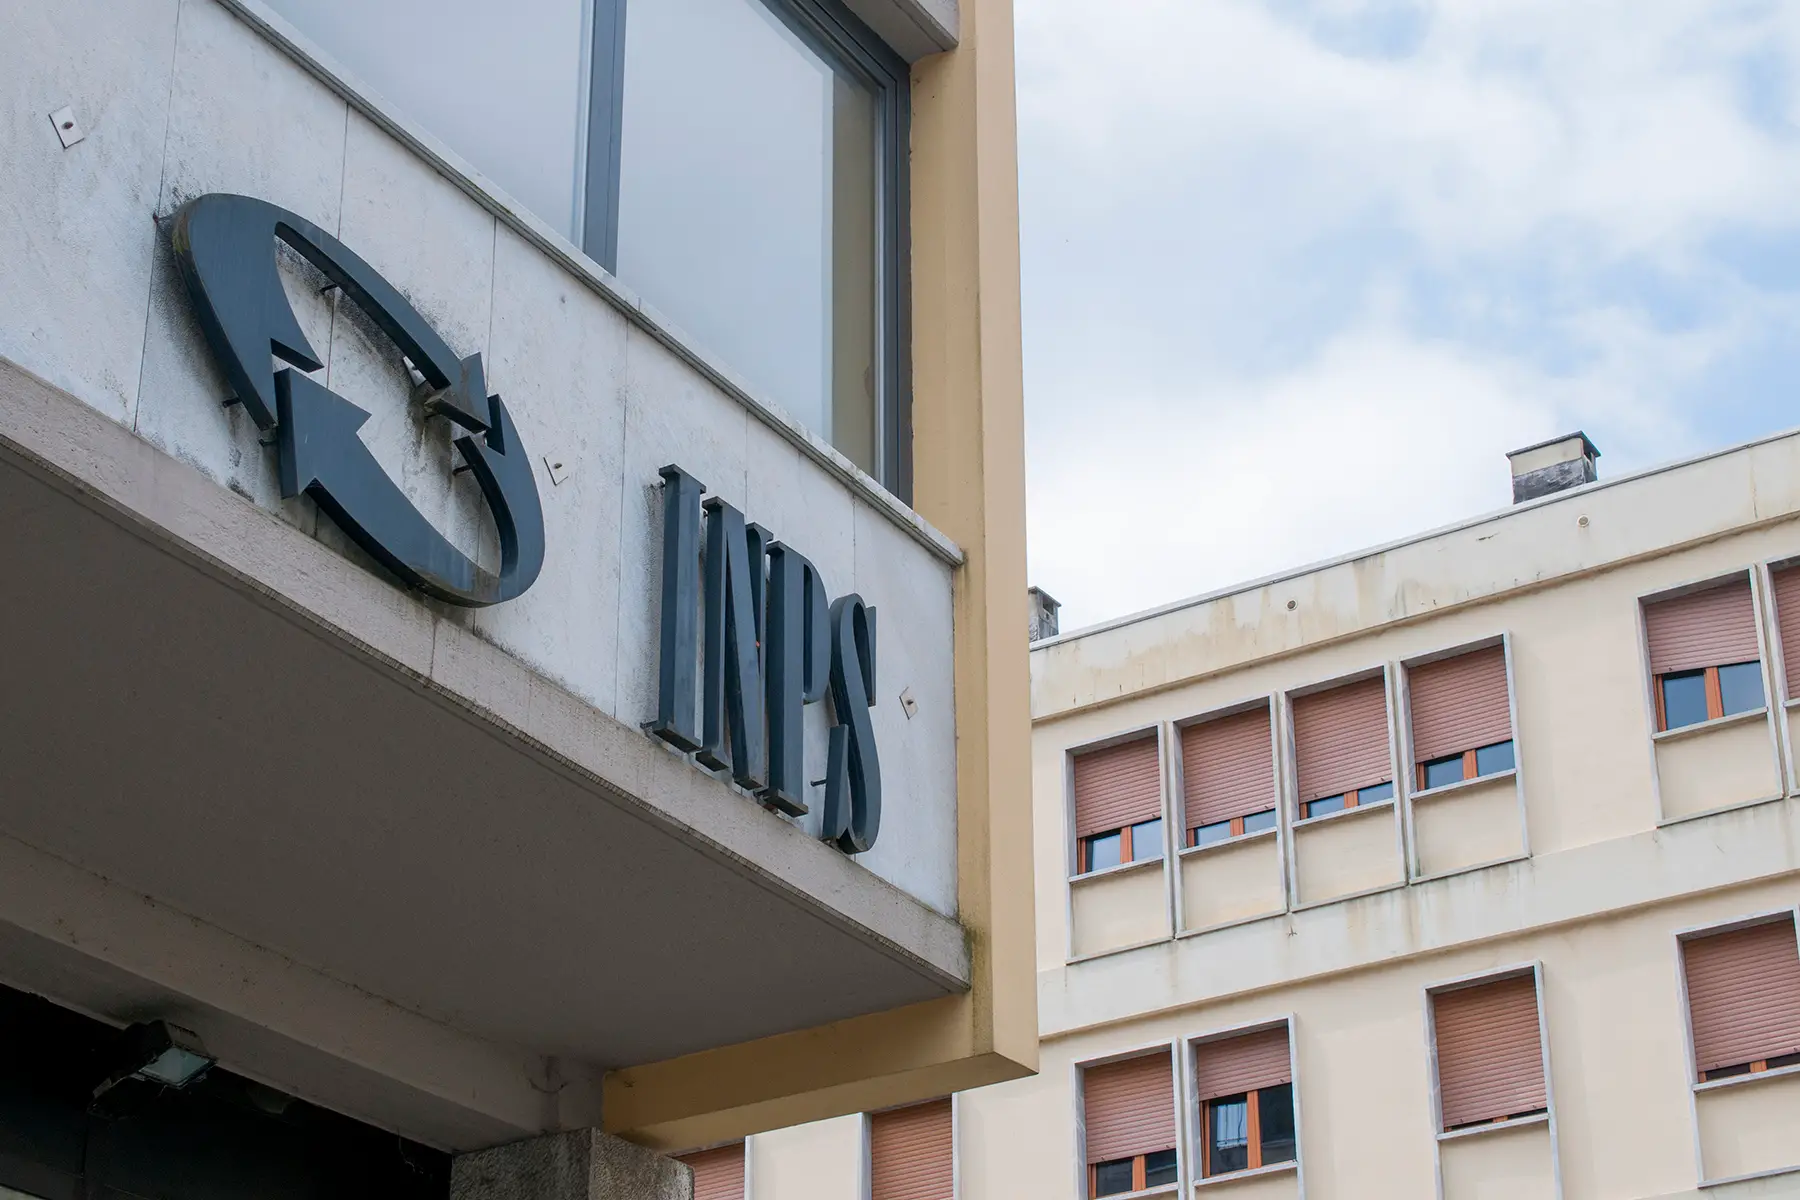 INPS building in Carrara, Italy.